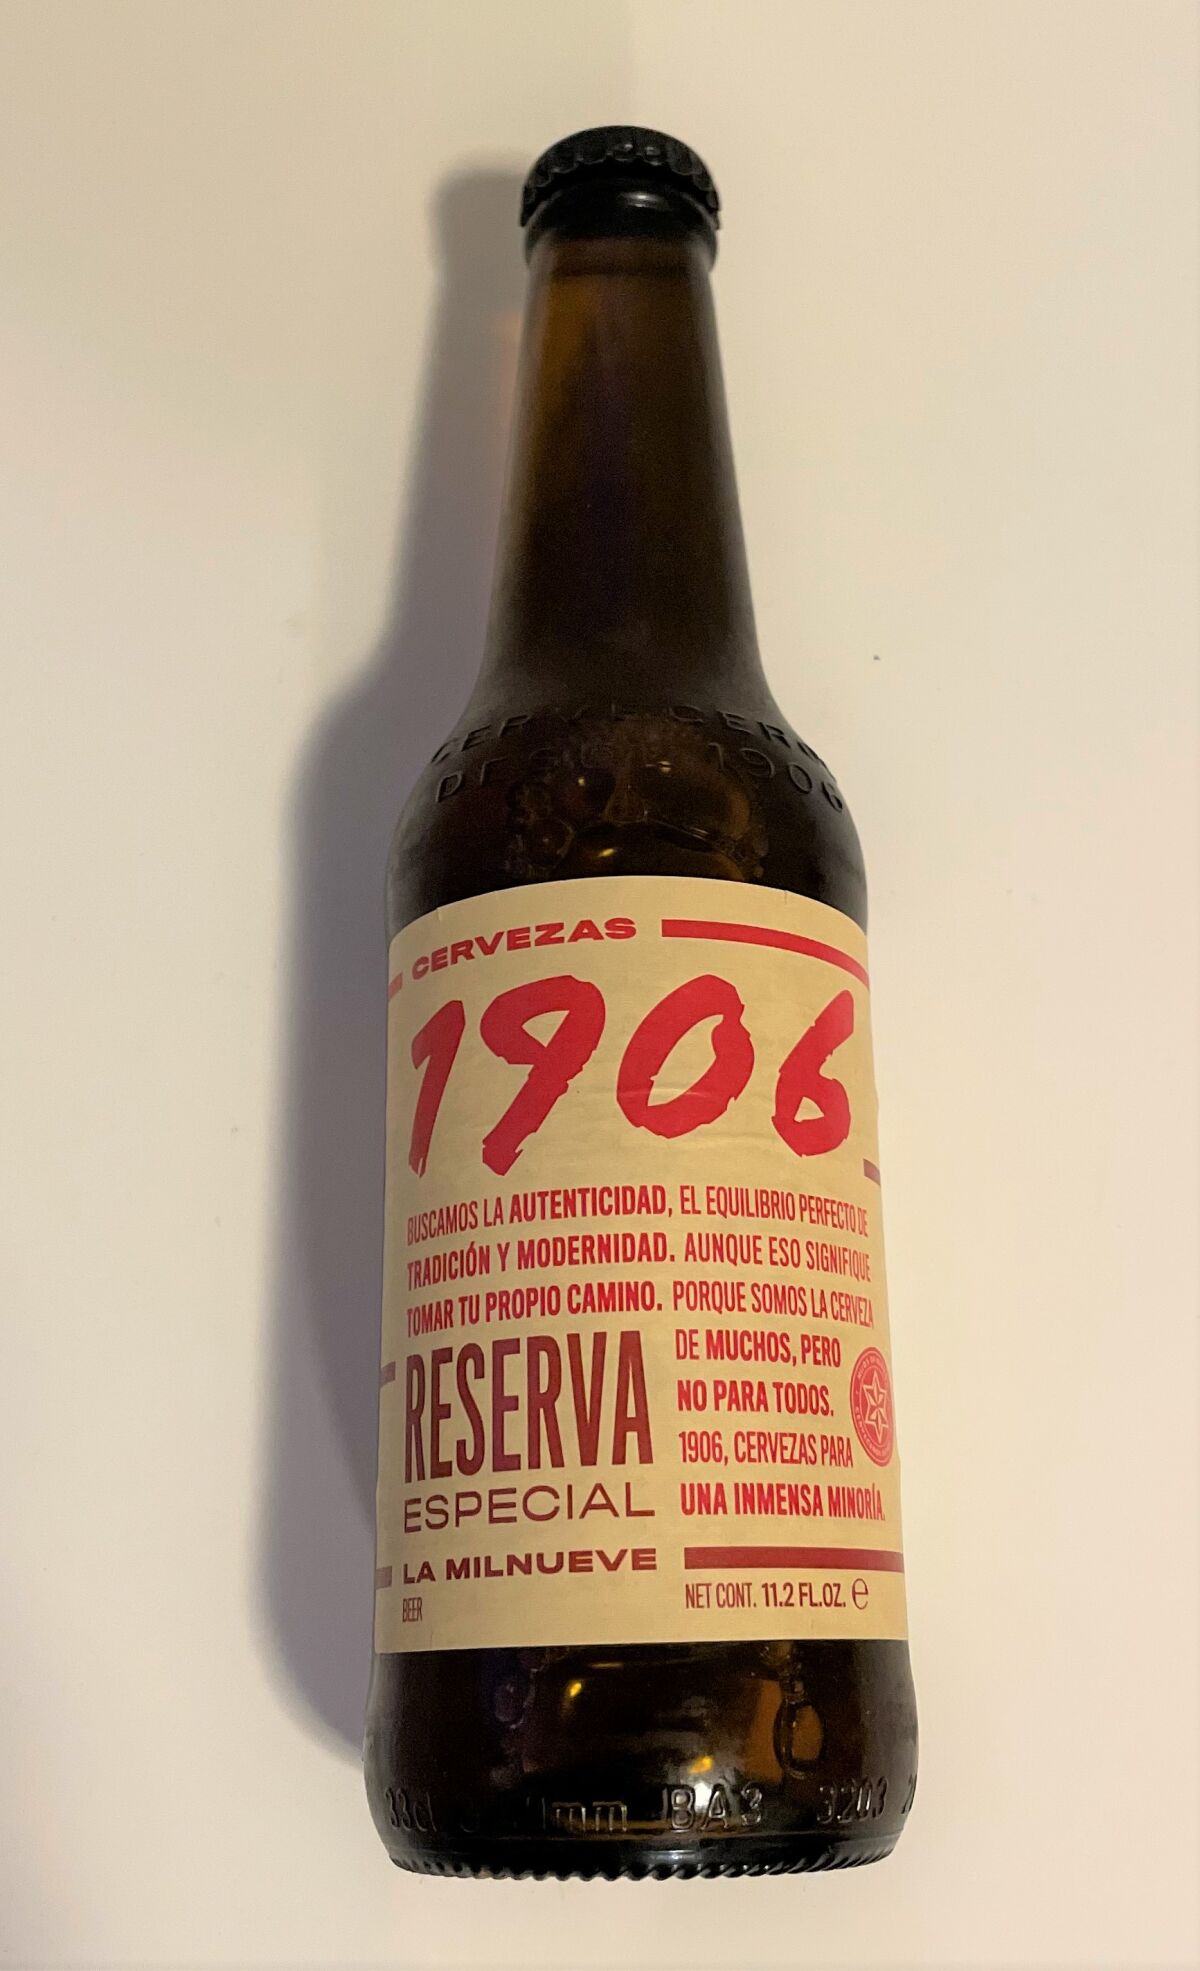 The Spanish beer 1906 Reservas Especial.